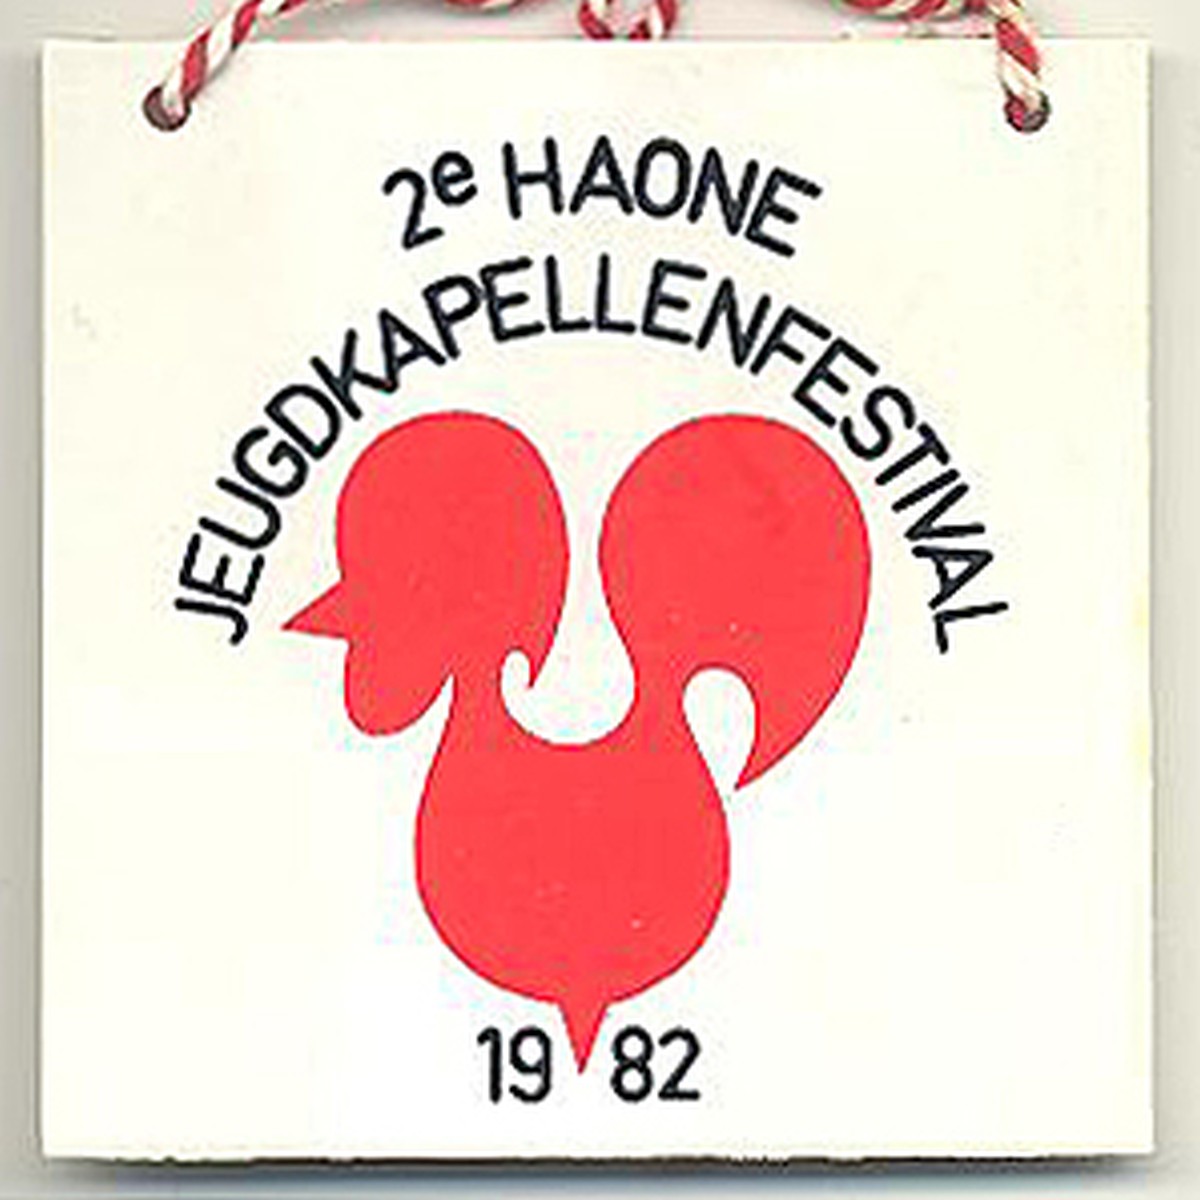 1982 01 30 2e Haone Jeugdkapellenfestival